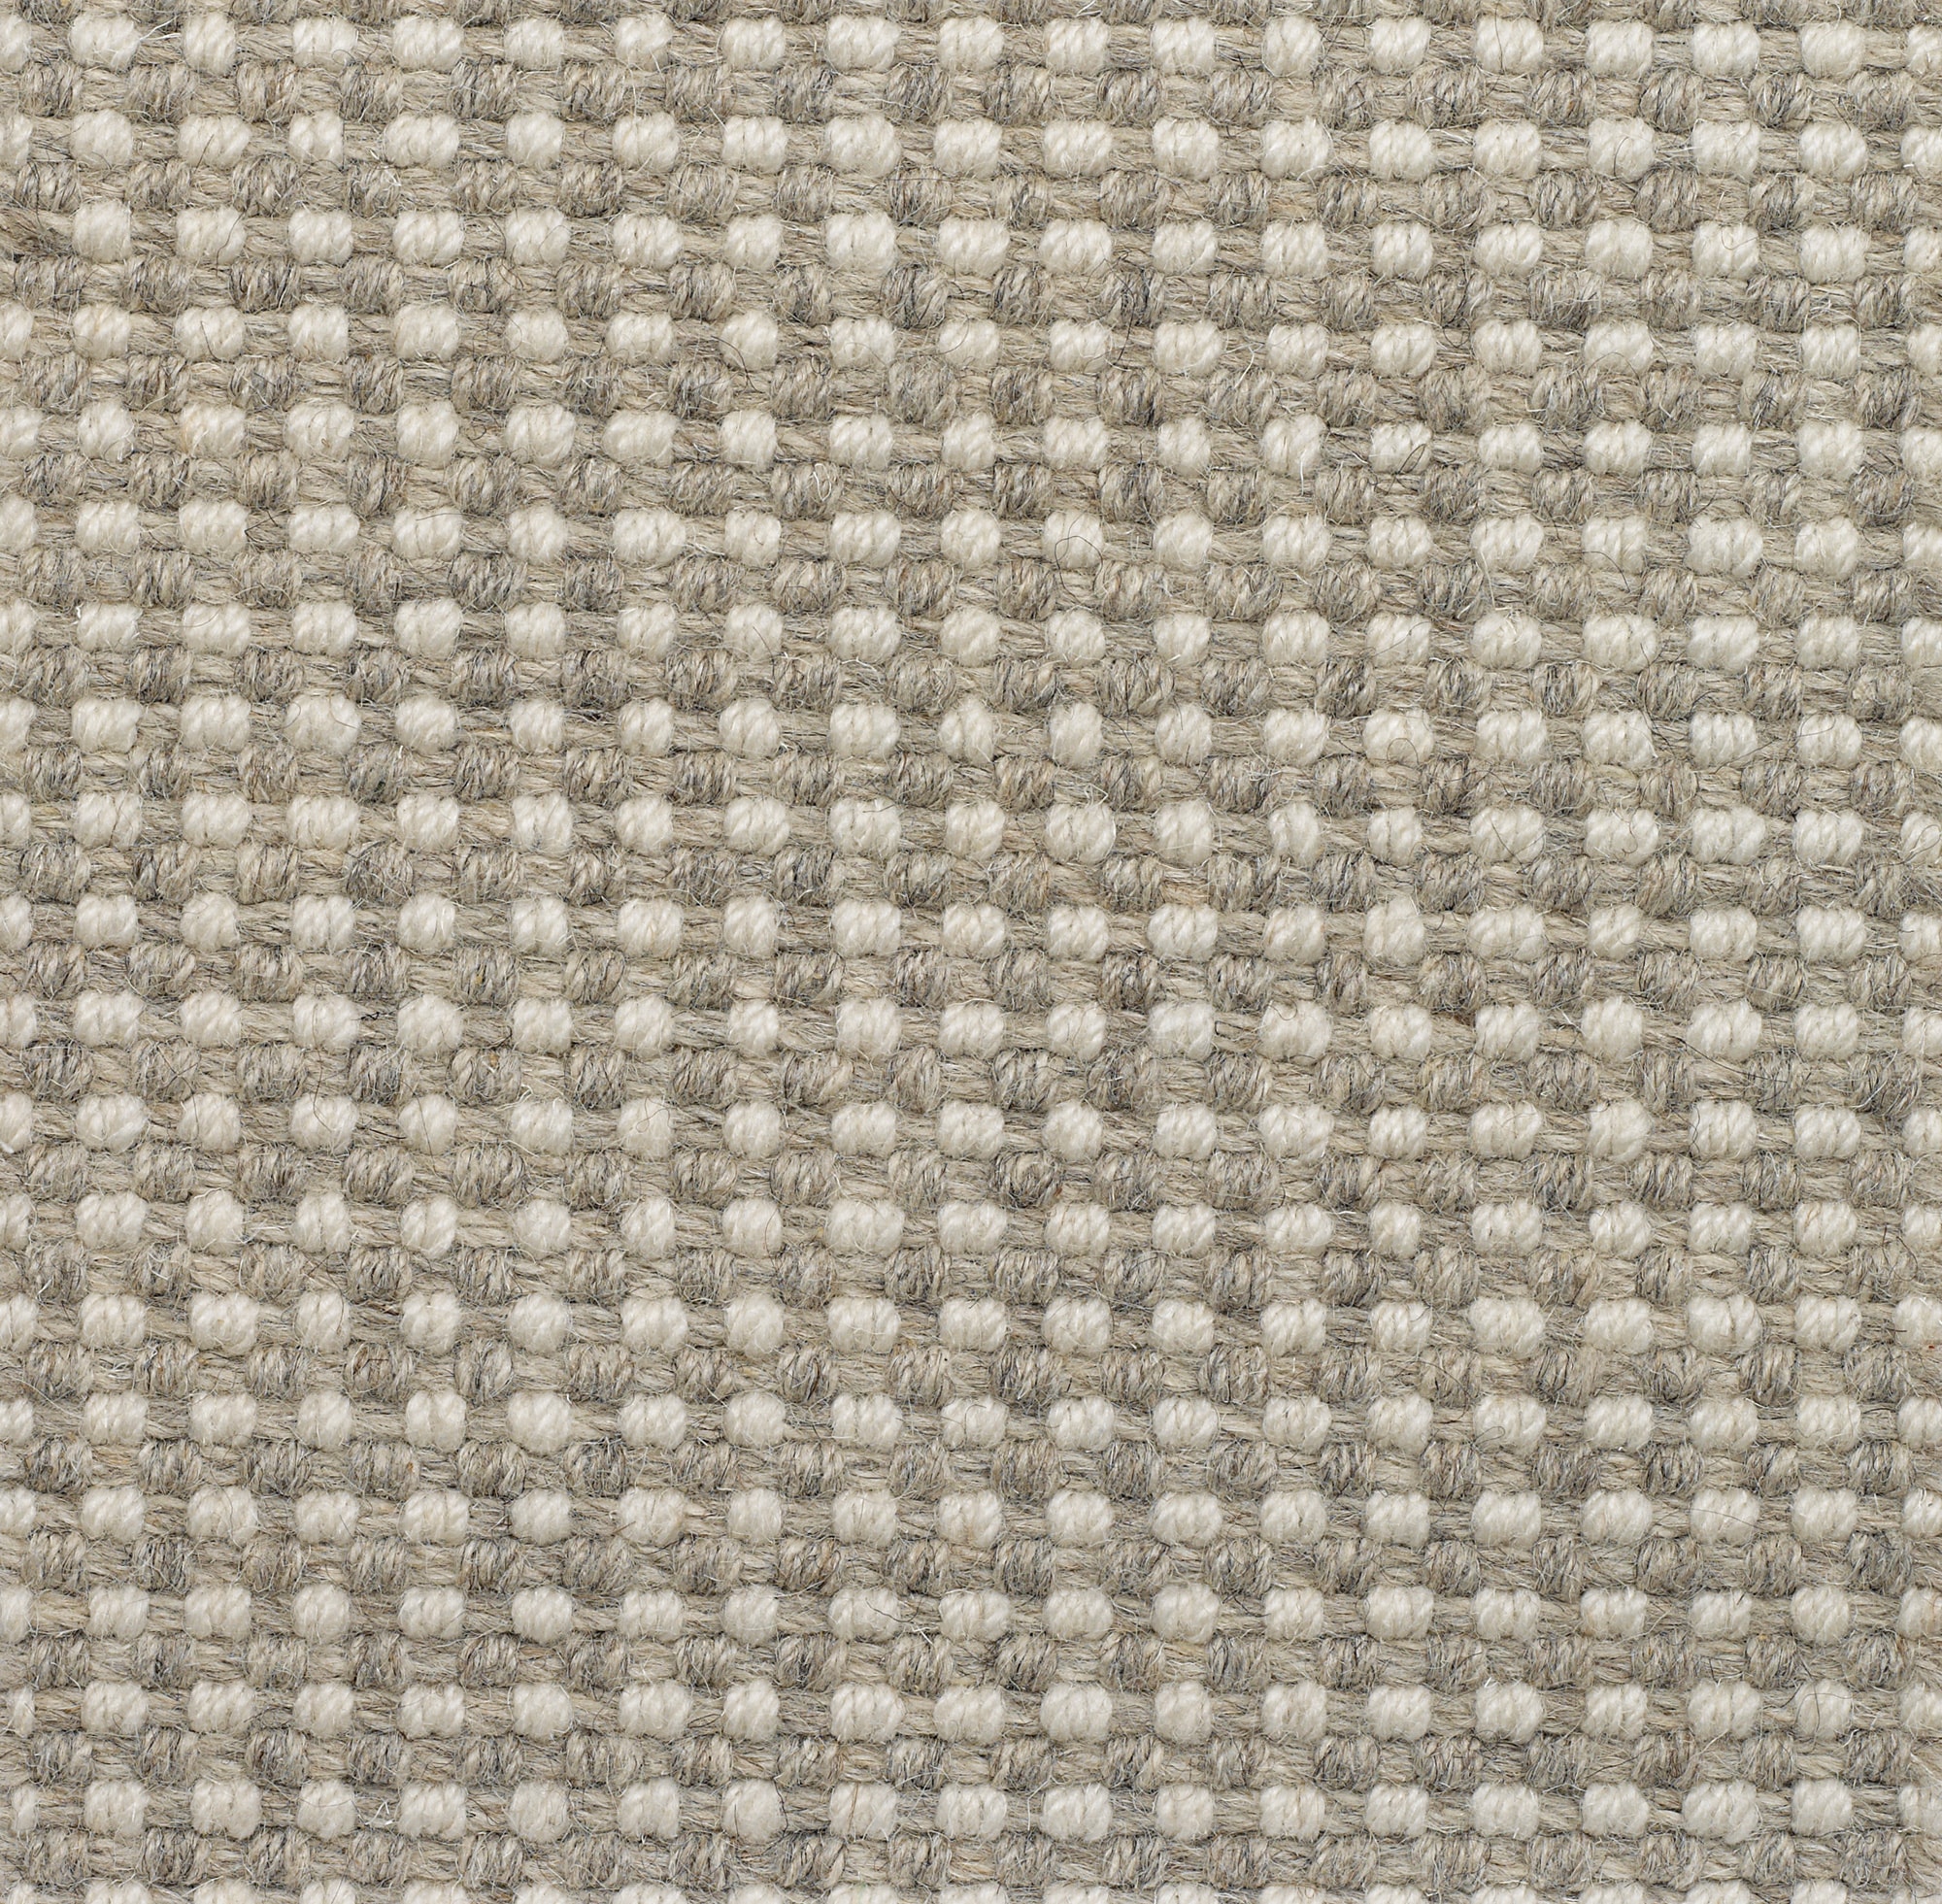 Florence: Ombra - 100% Wool Carpet